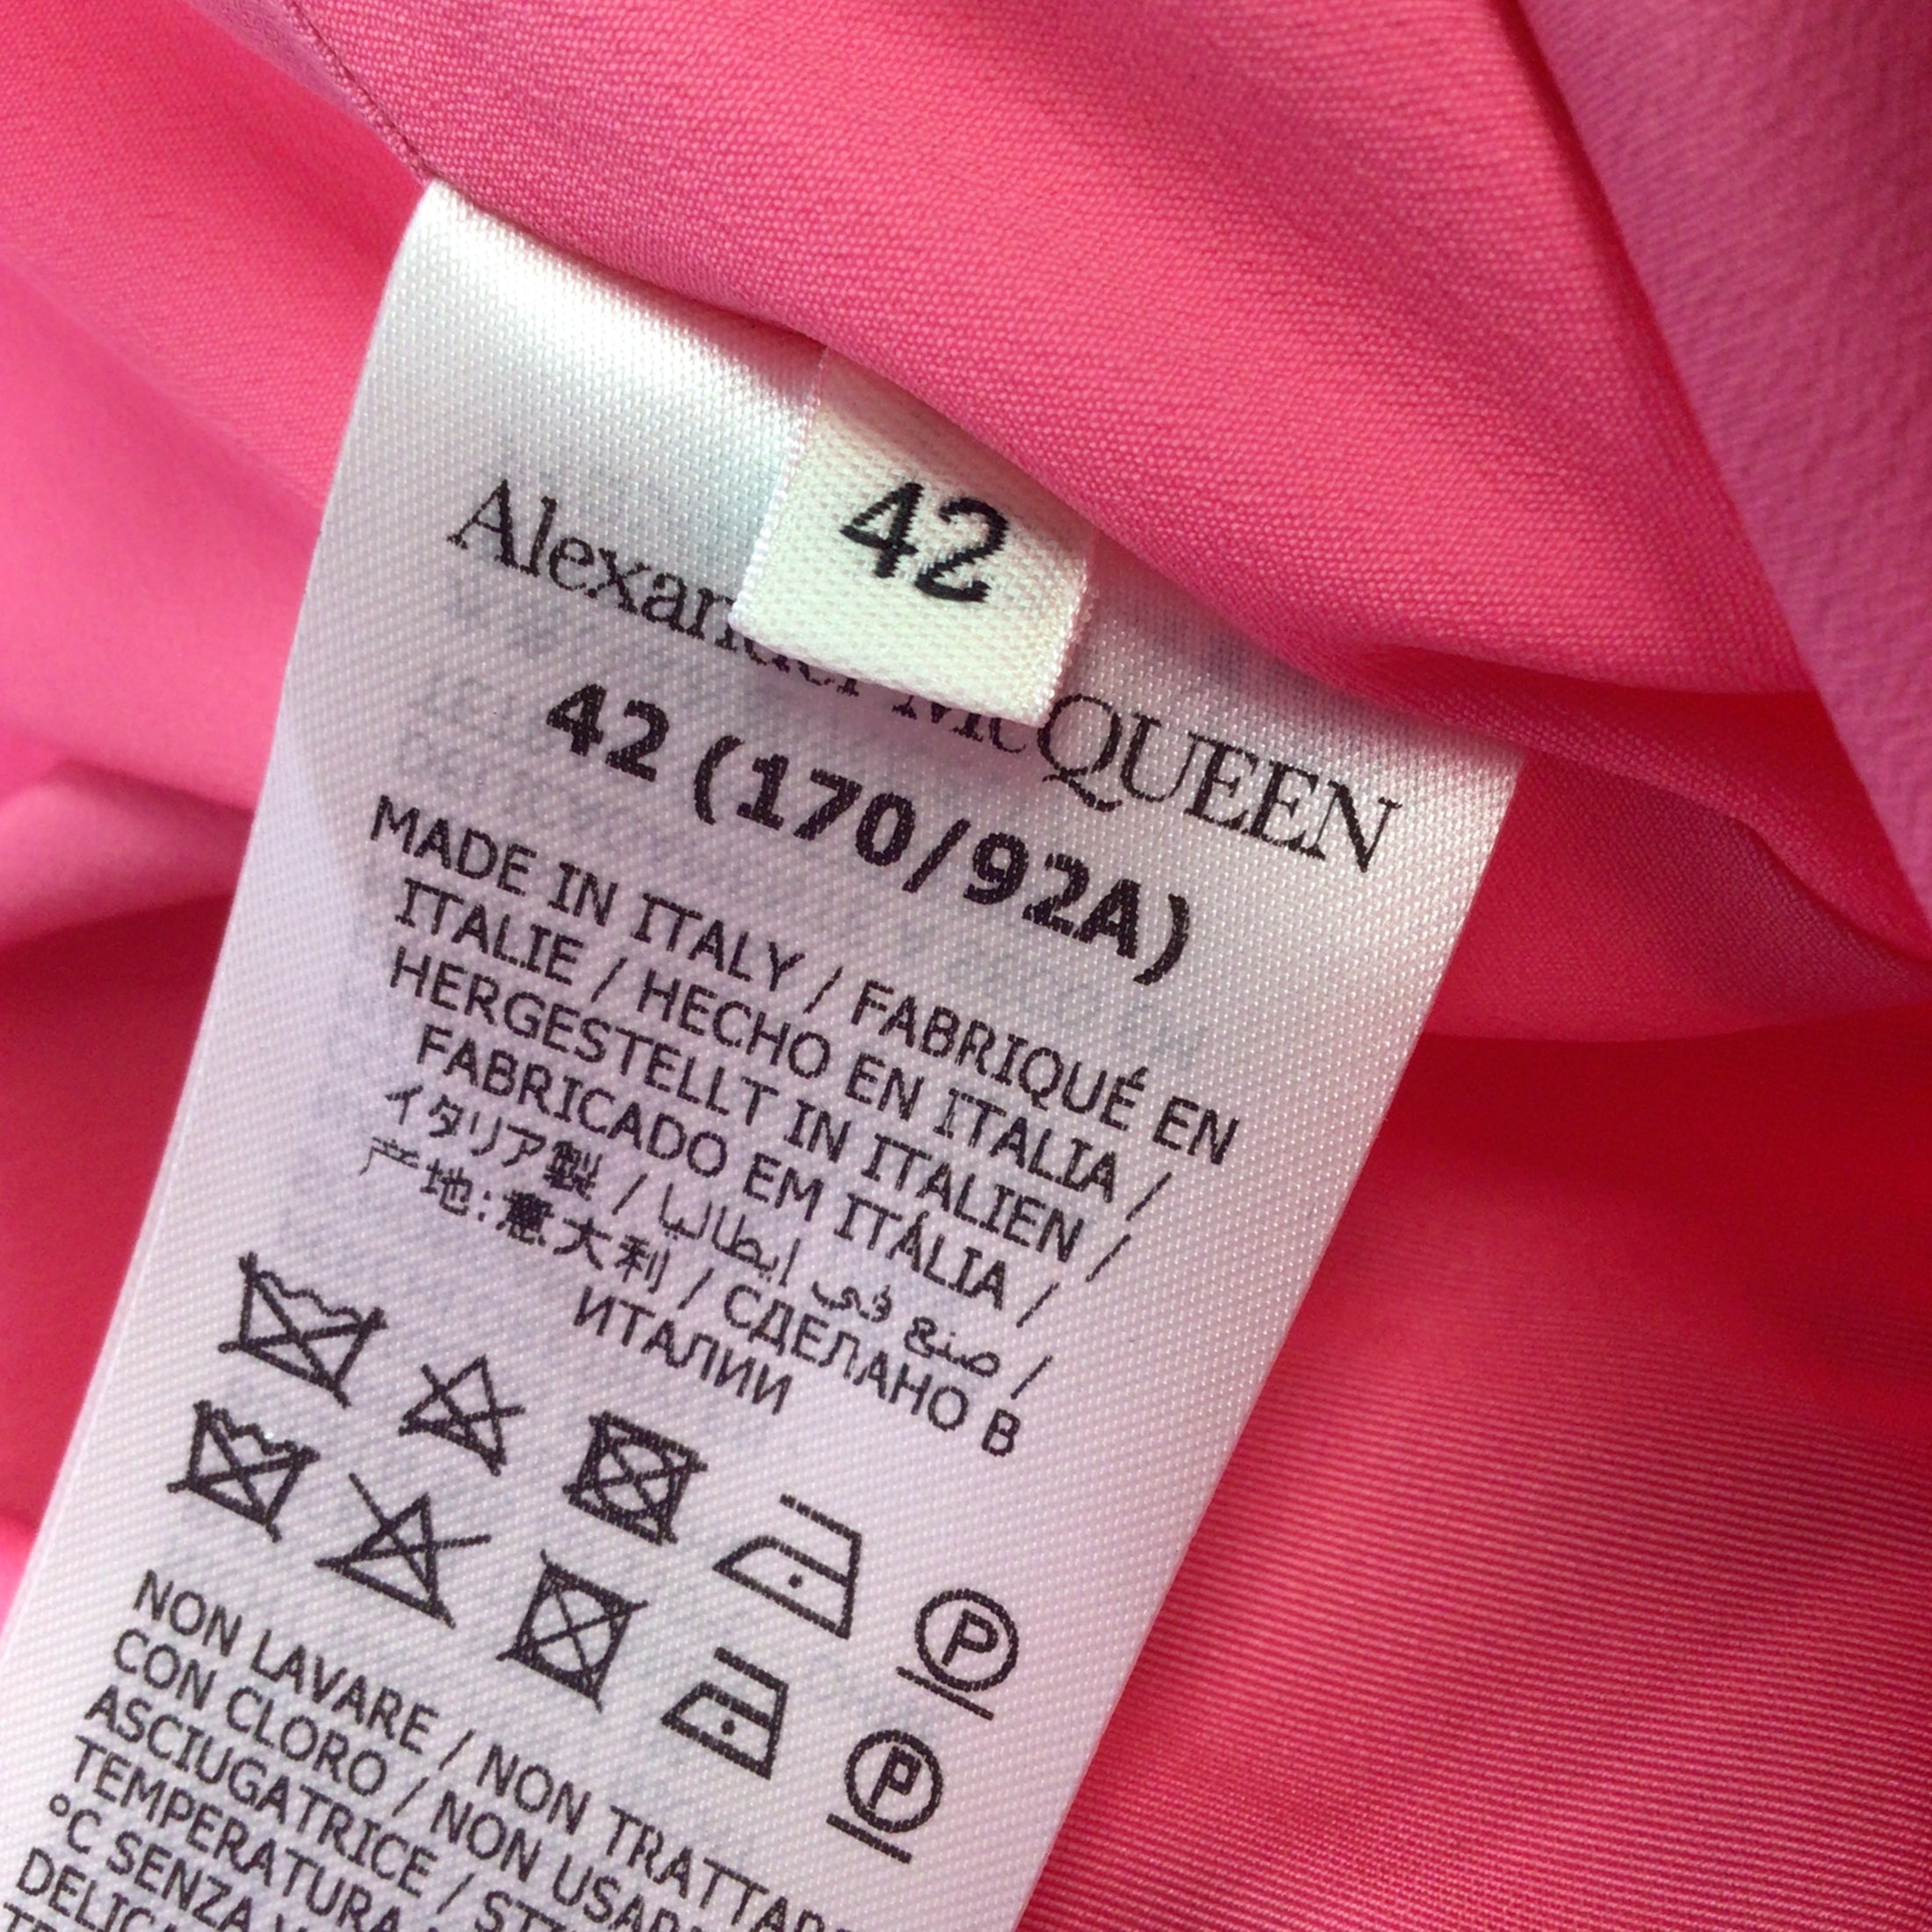 Alexander McQueen Pink Ruffled Sleeveless Flared Mini Dress